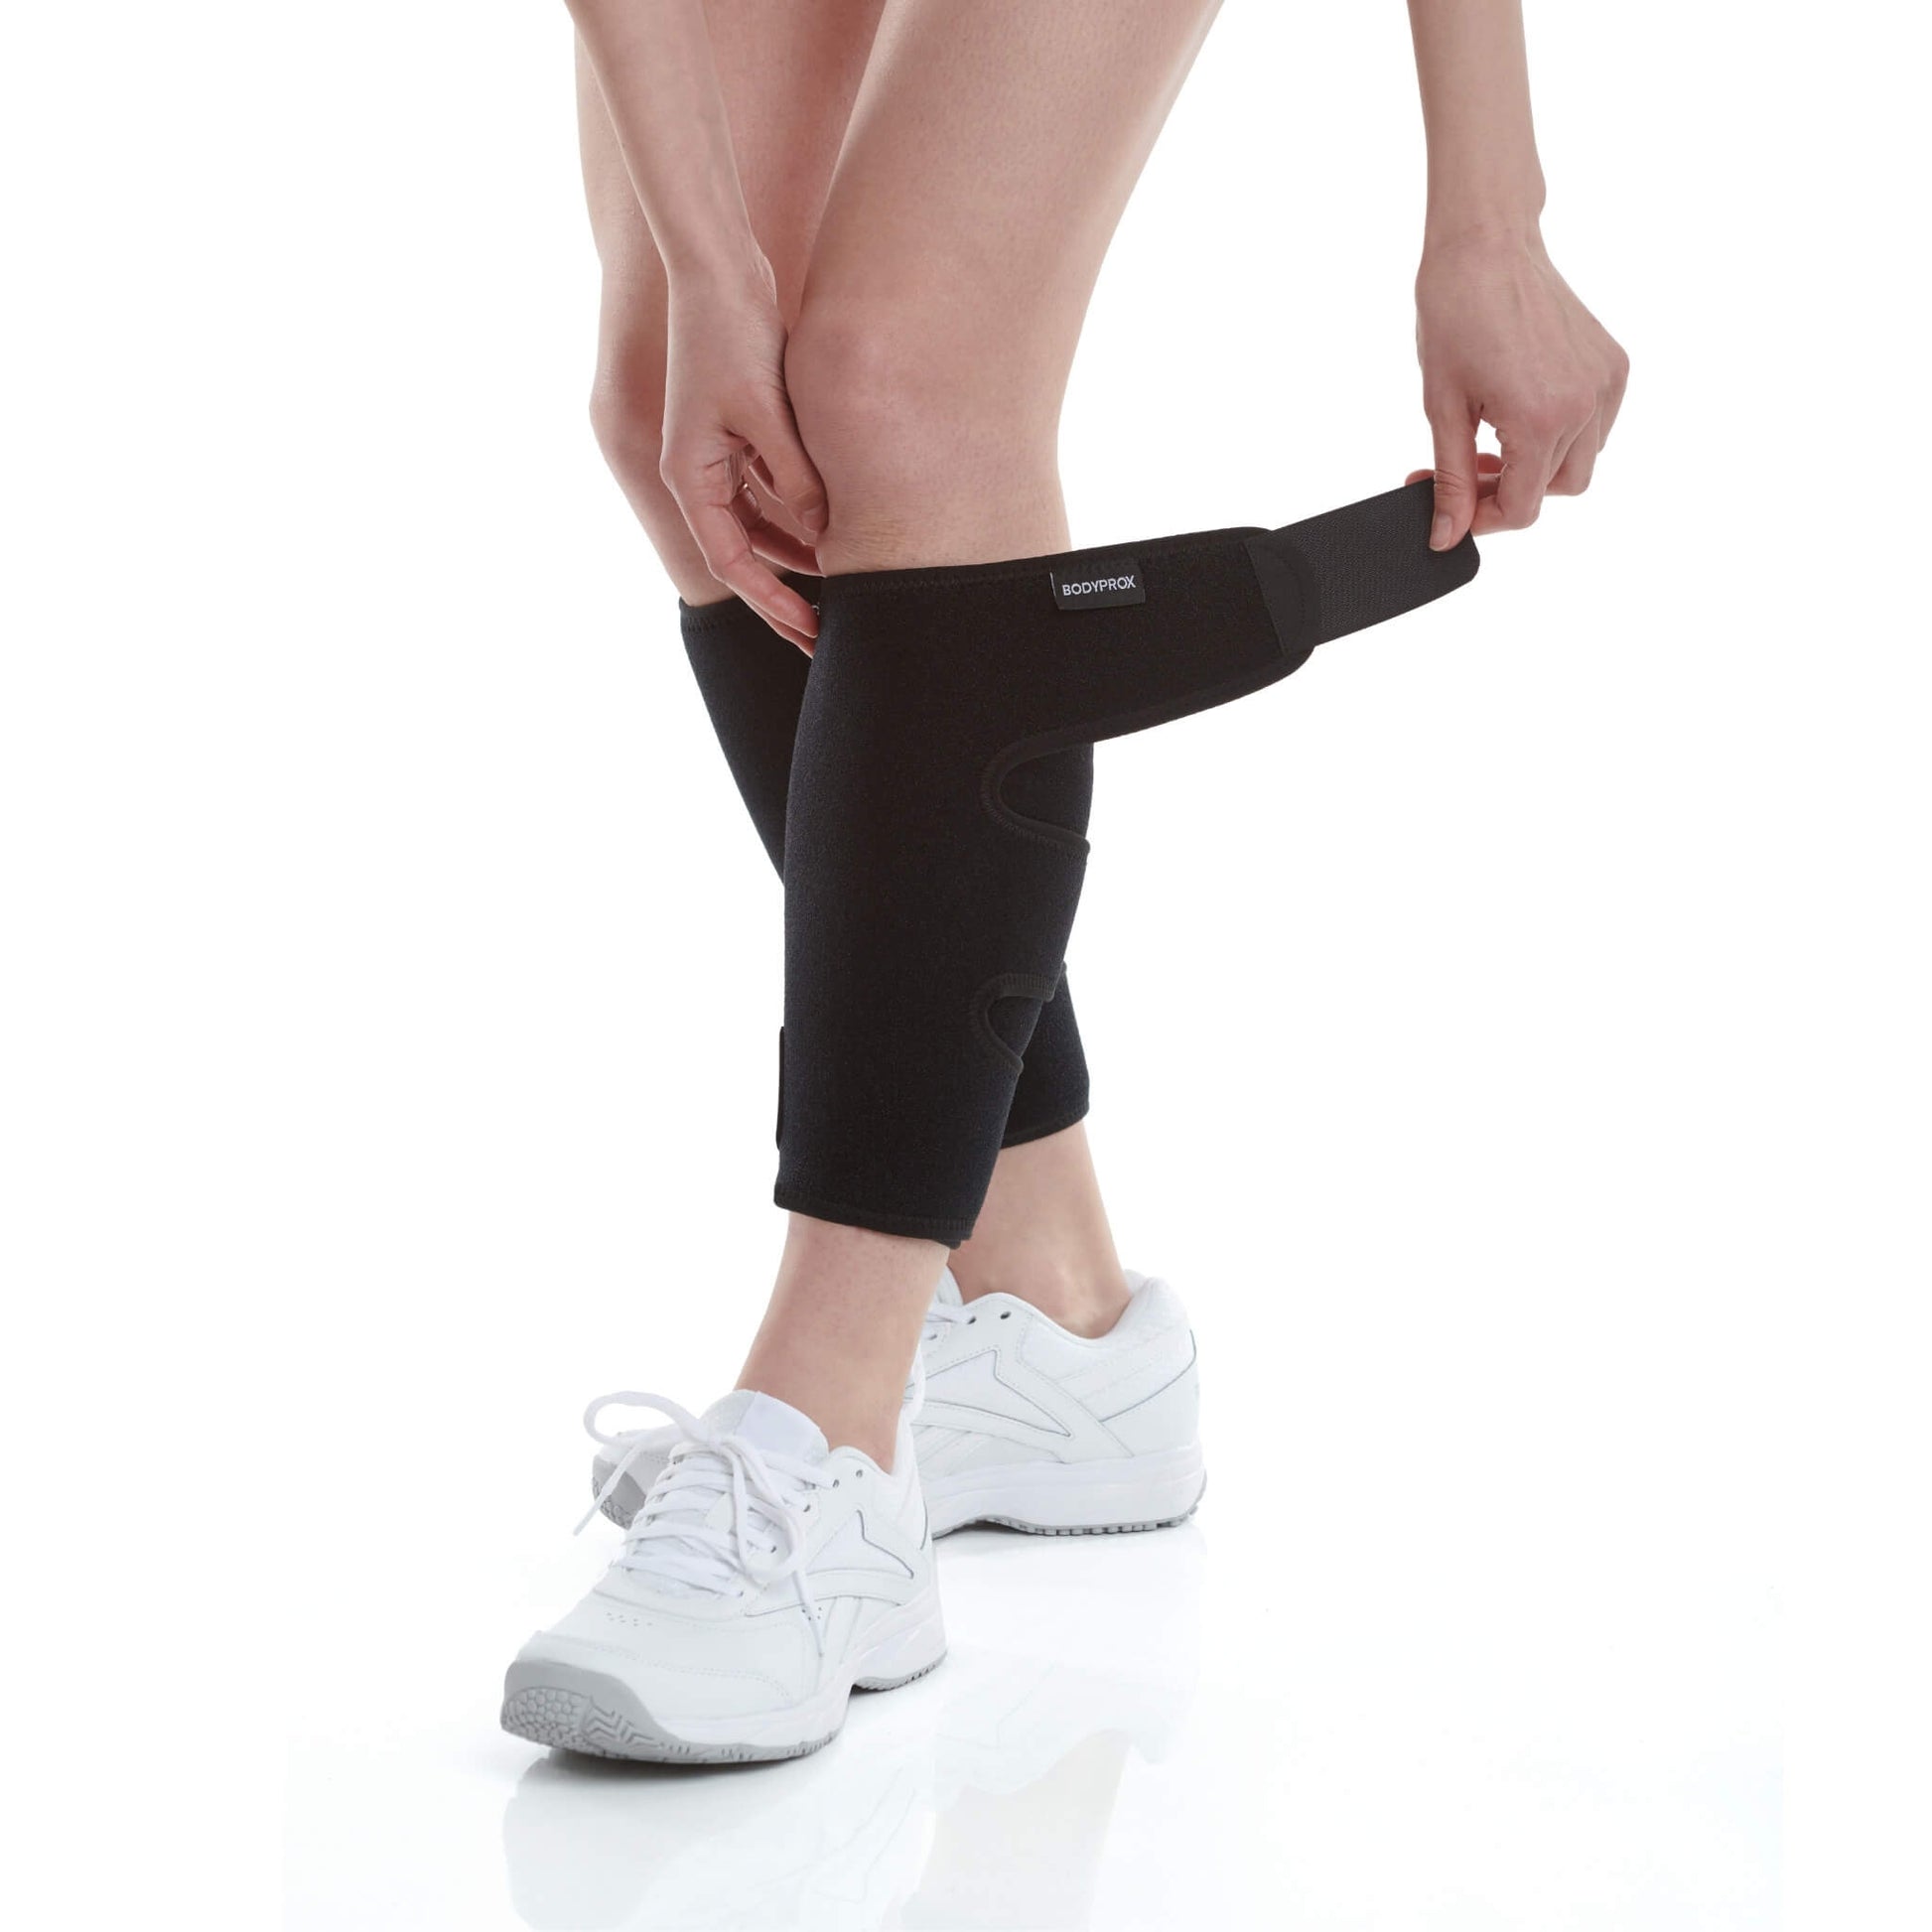 Qiilu Yosoo Calf Compression Brace Shin Splint Sleeve Support Lower Leg  Wrap Muscle US,Calf Brace Adjustable Shin Splint Support Sleeve Leg  Compression Wrap 